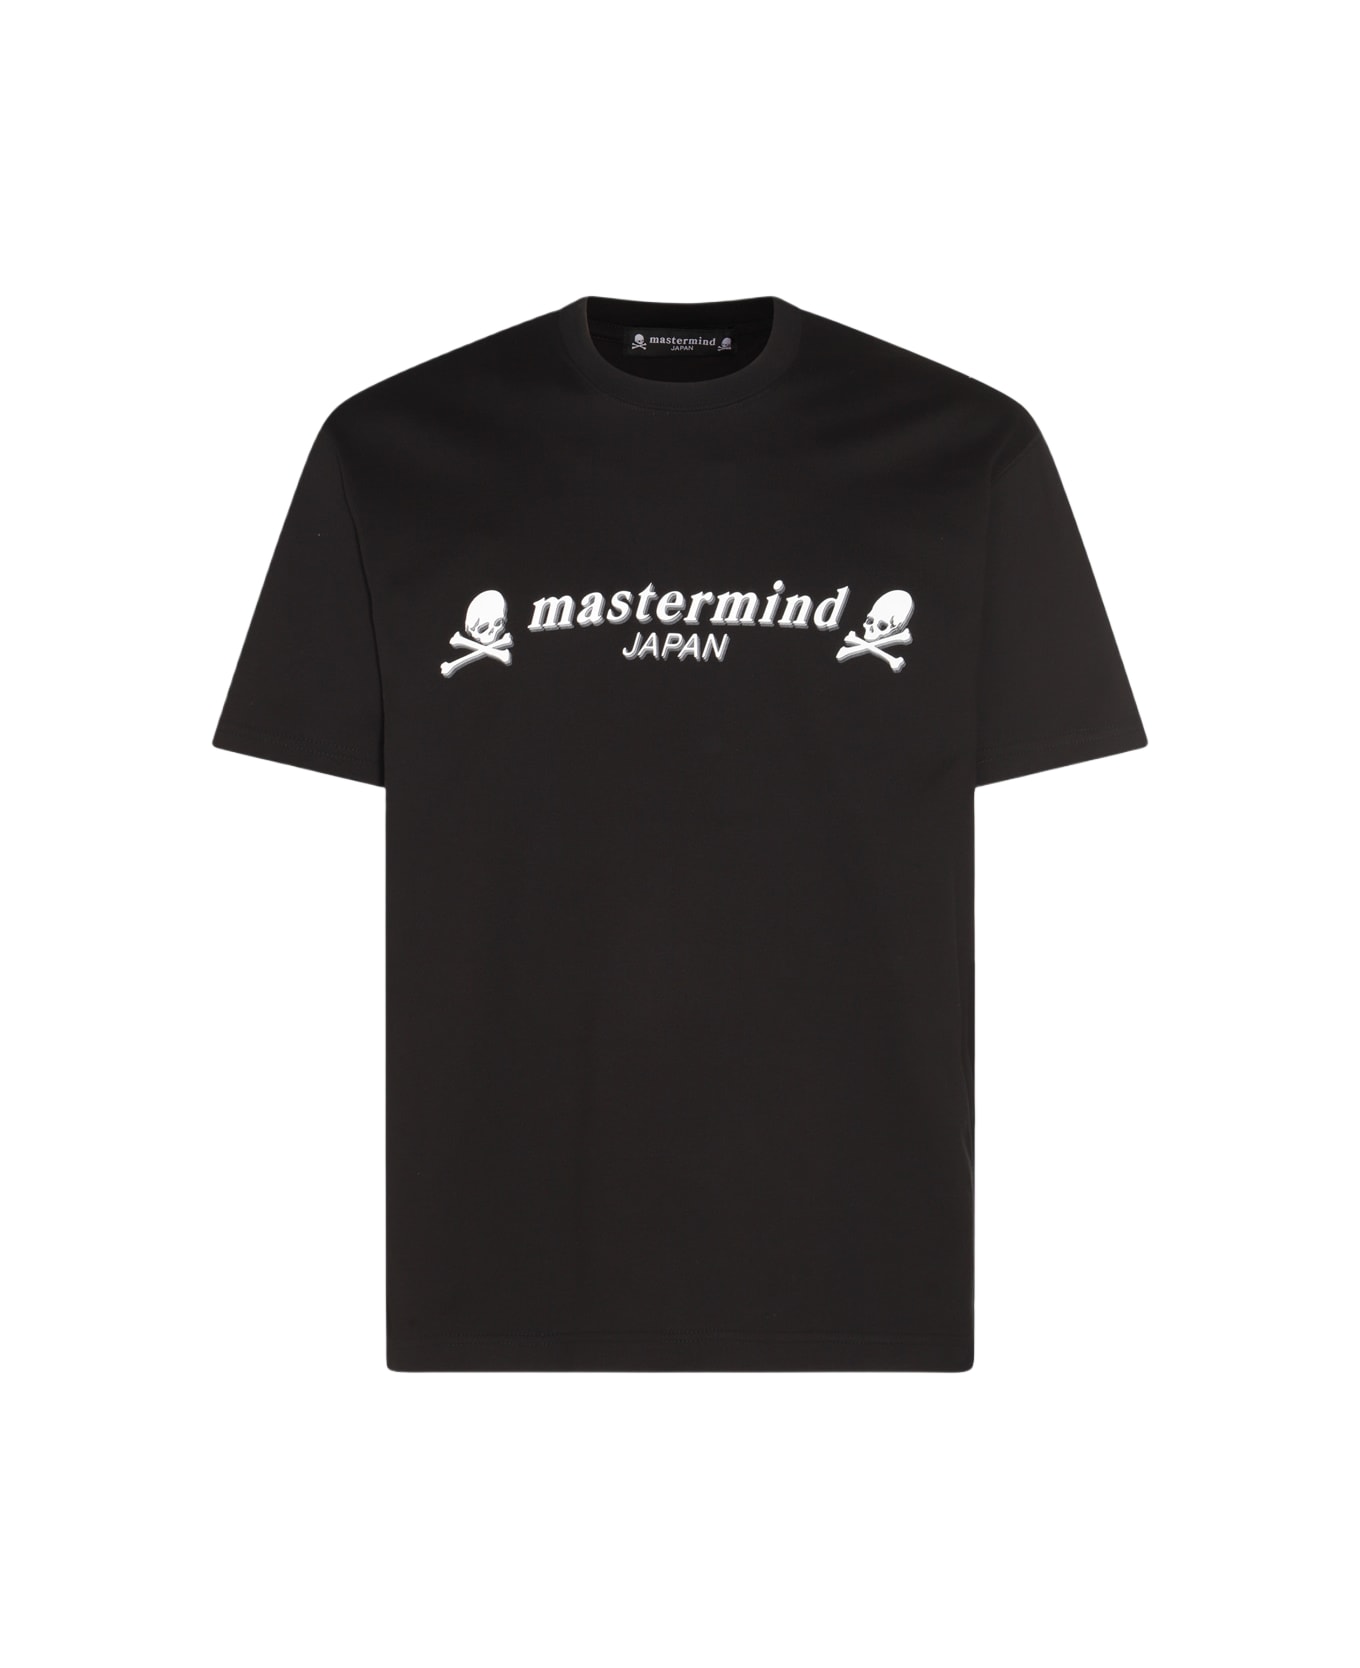 Mastermind Japan Black And White Cotton T-shirt - Black シャツ